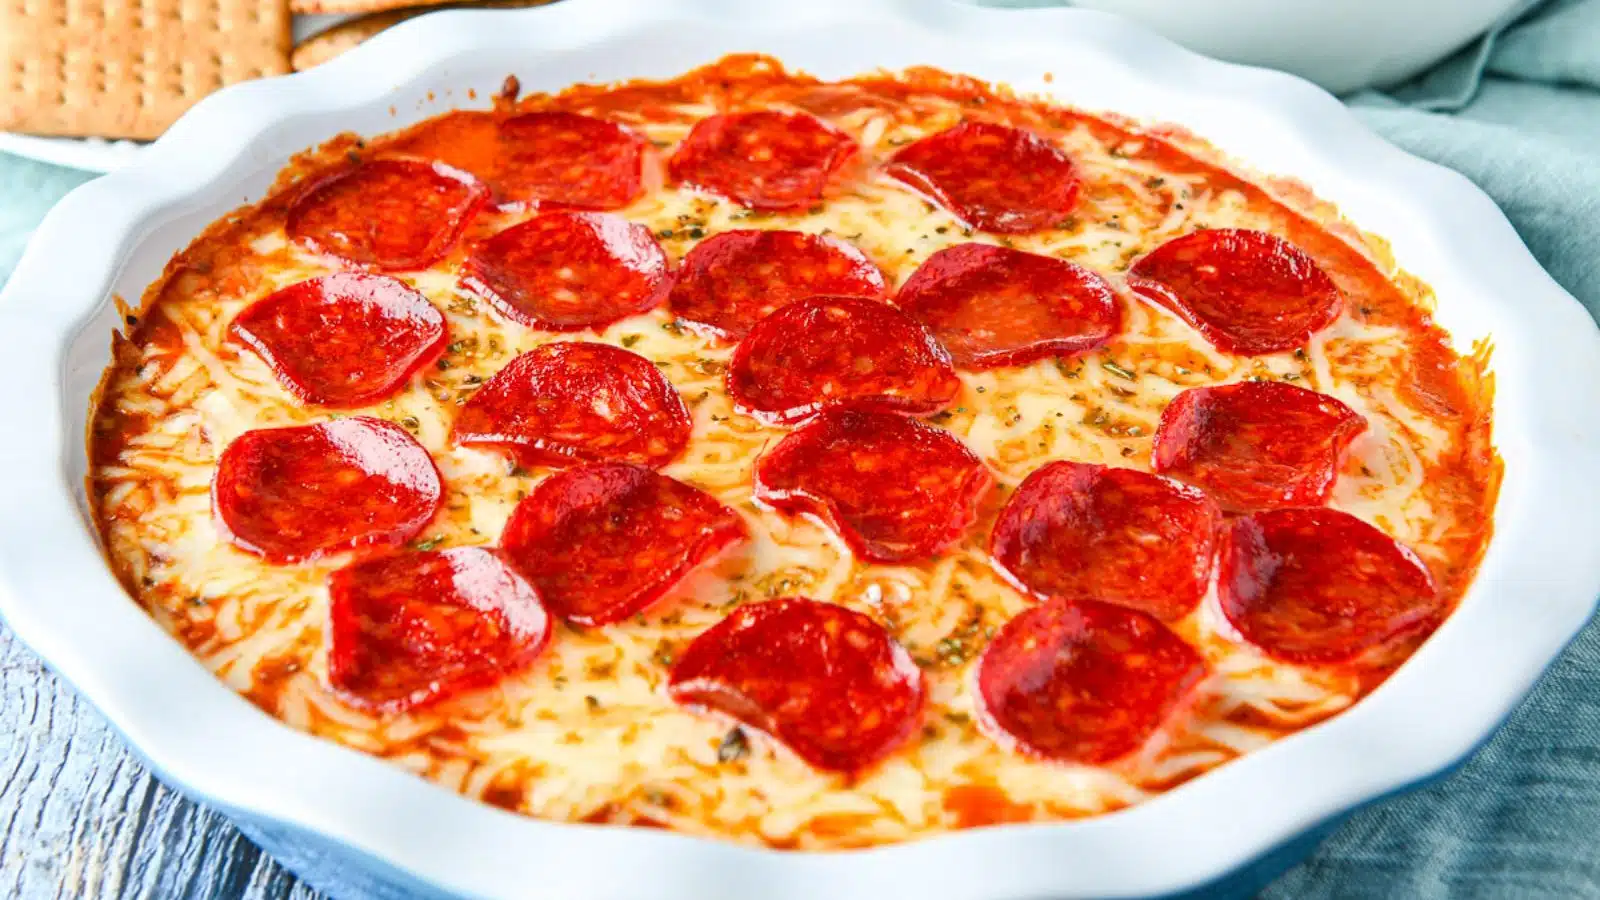 Pepperoni Pizza Dip - Dishes Delish